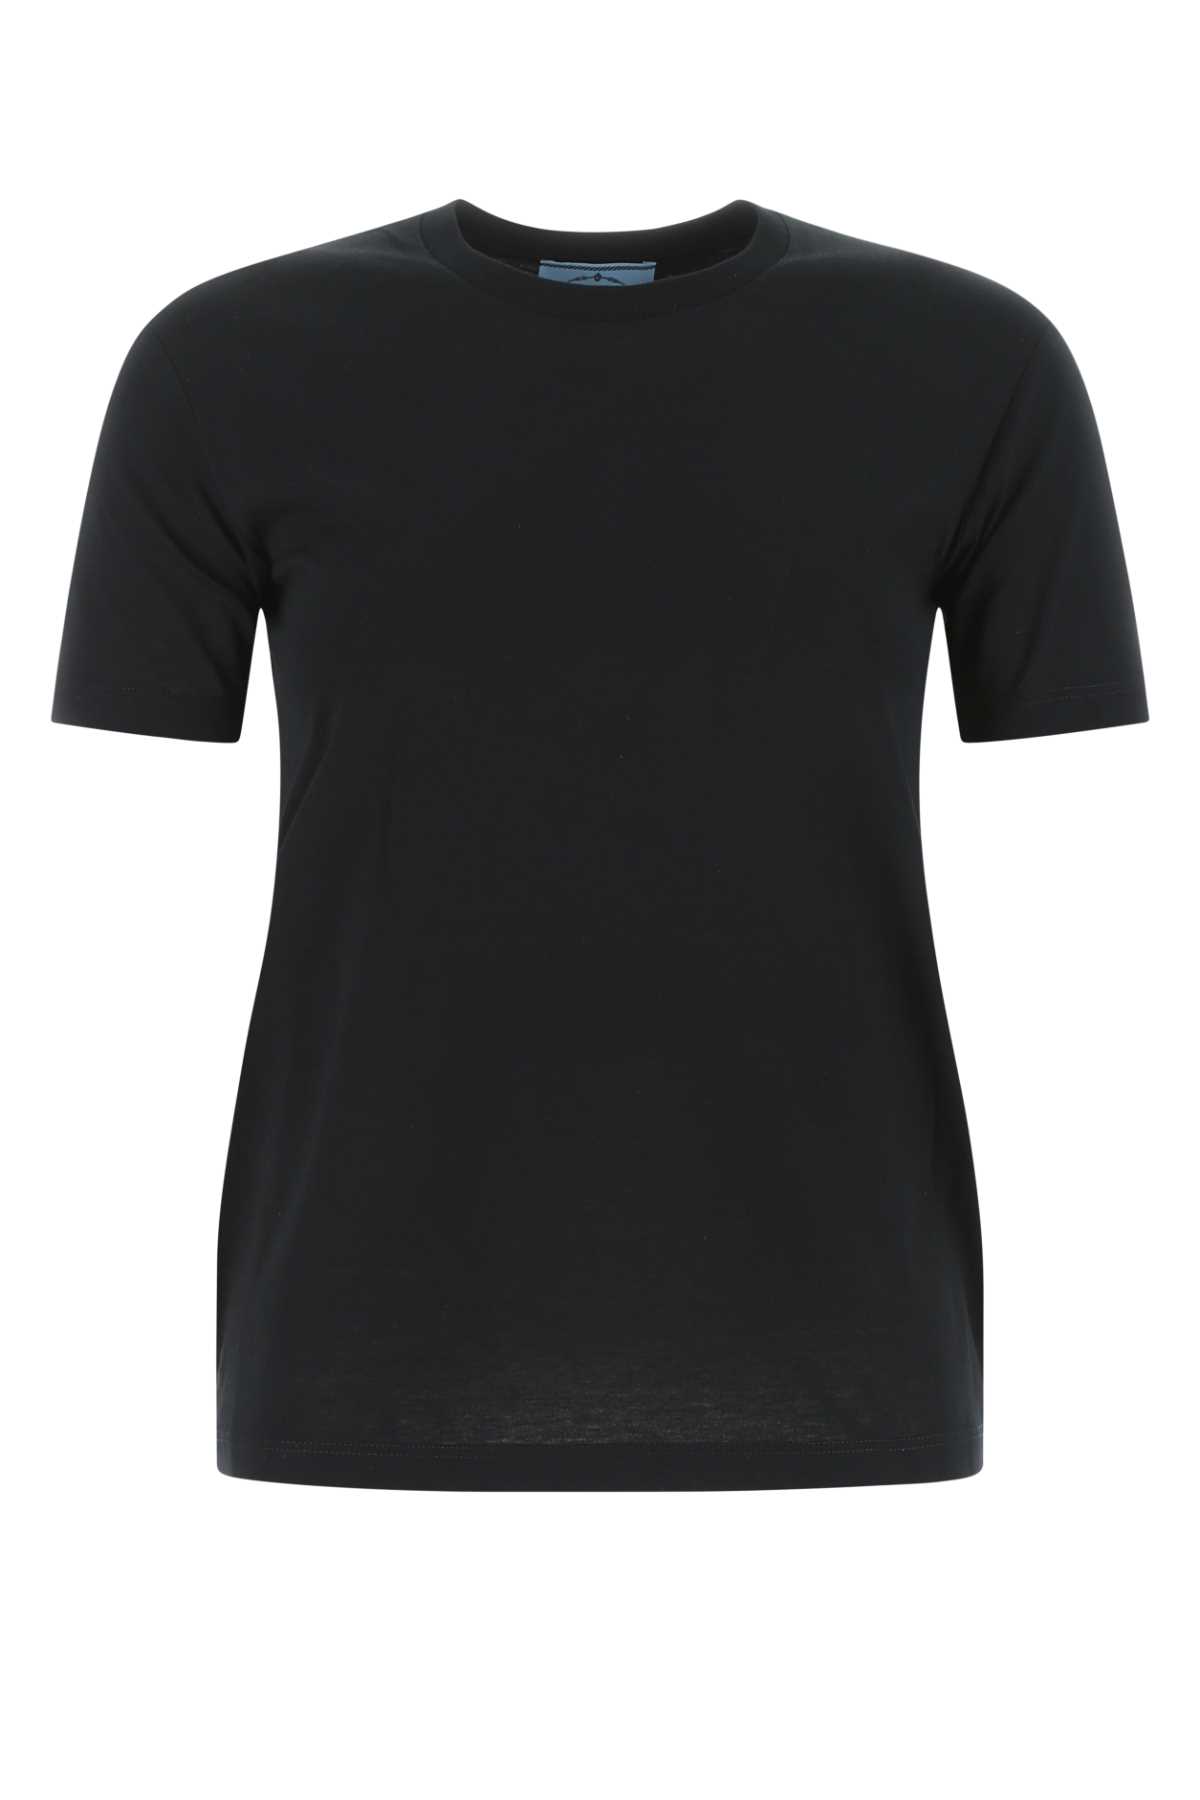 Prada Black Cotton T-shirt Set